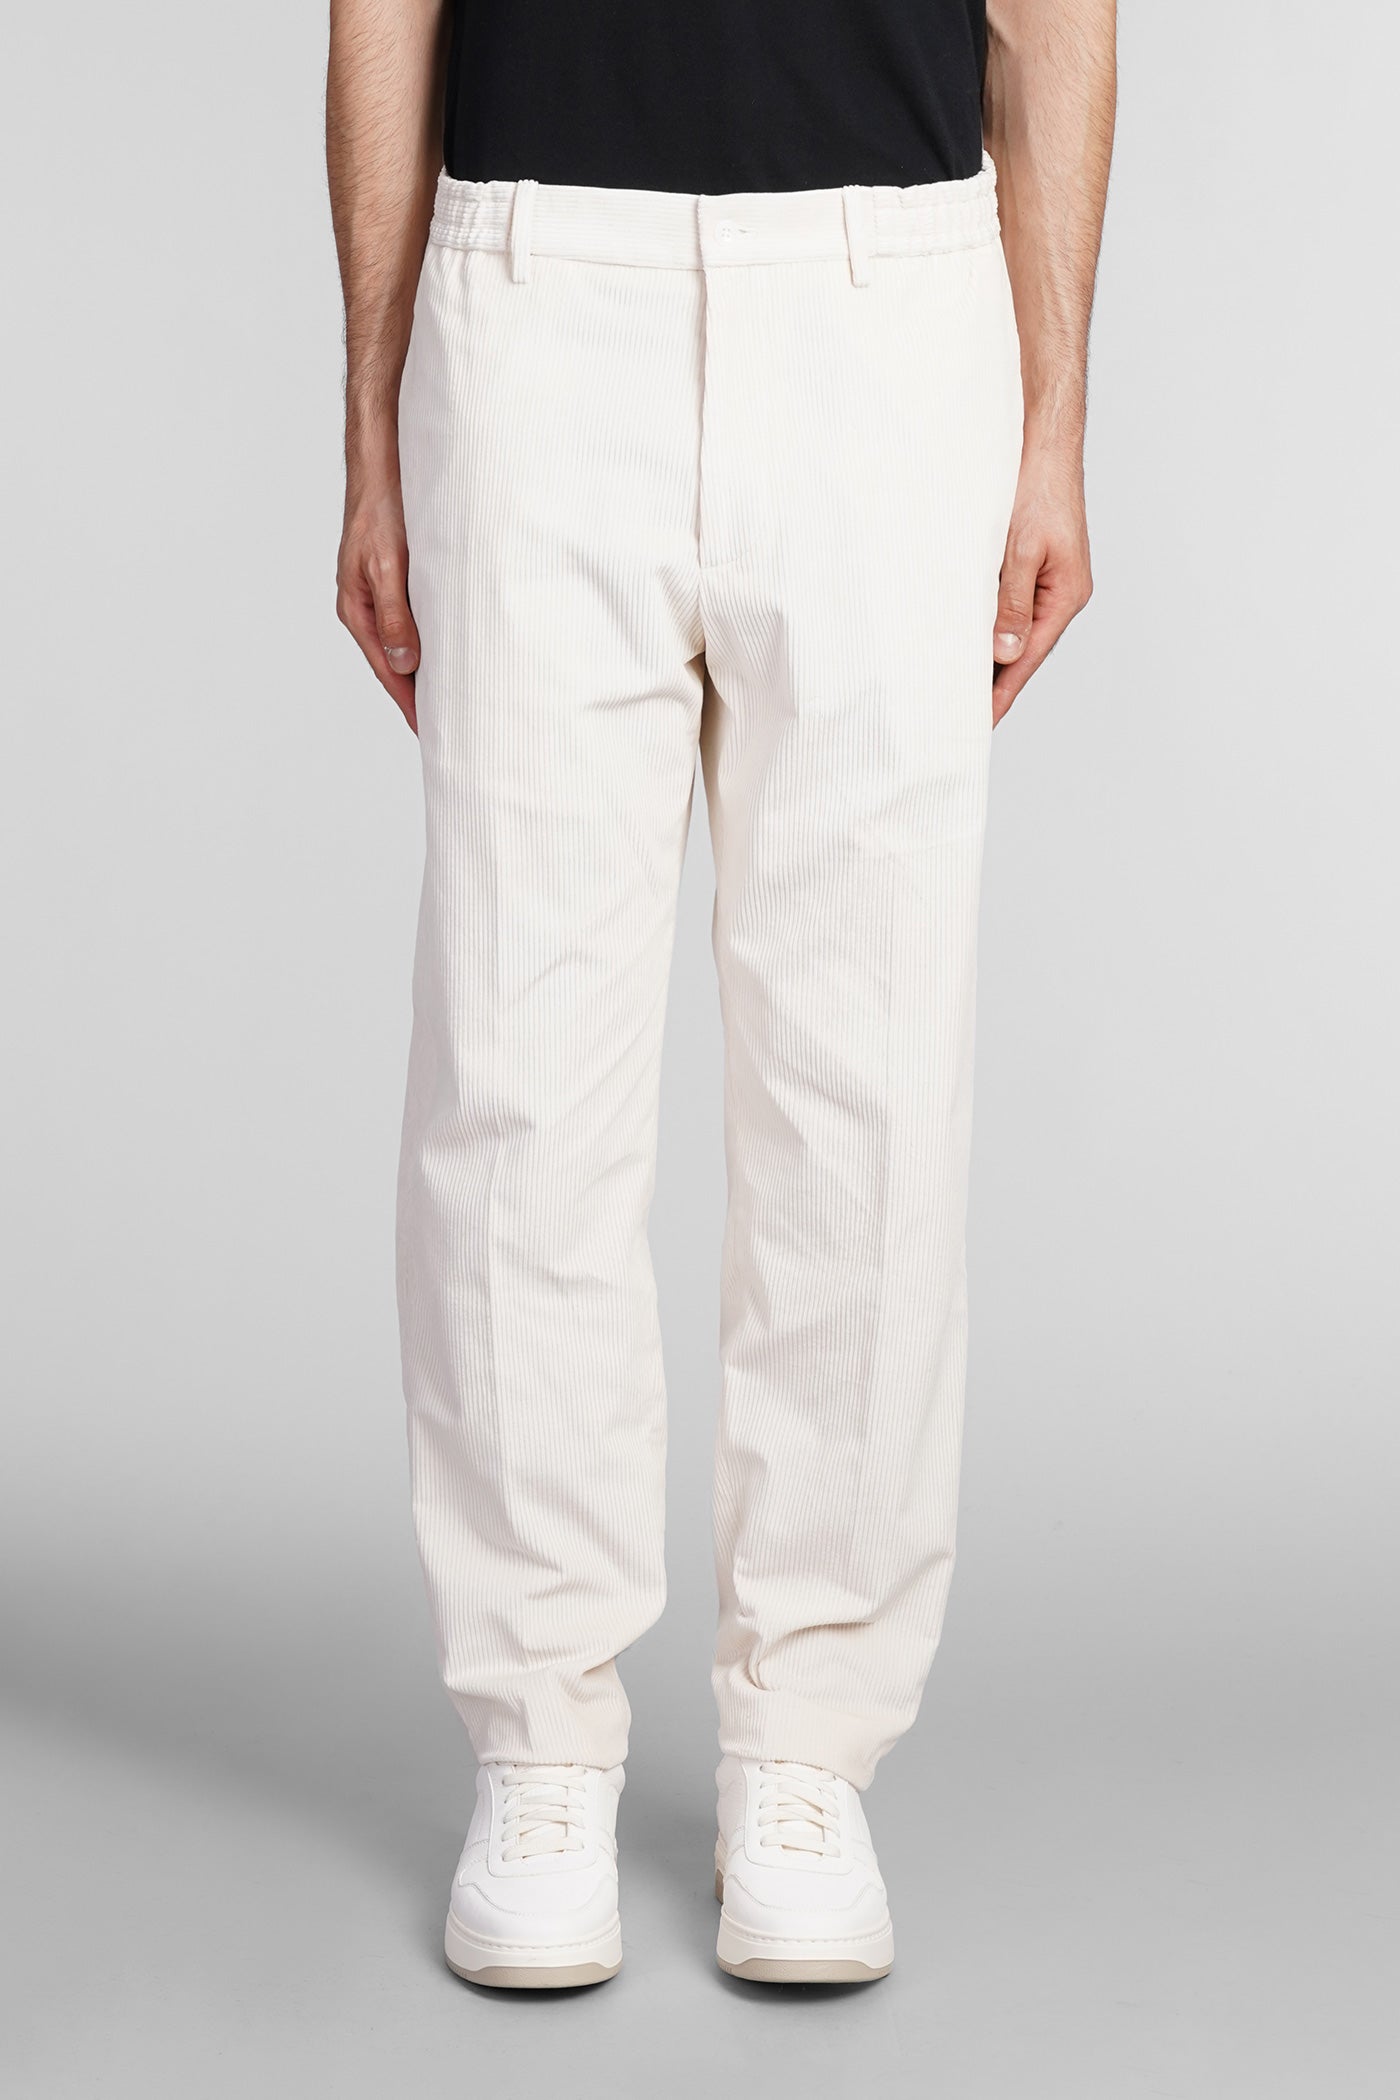 Tagliatore 0205 - Pants in beige cotton